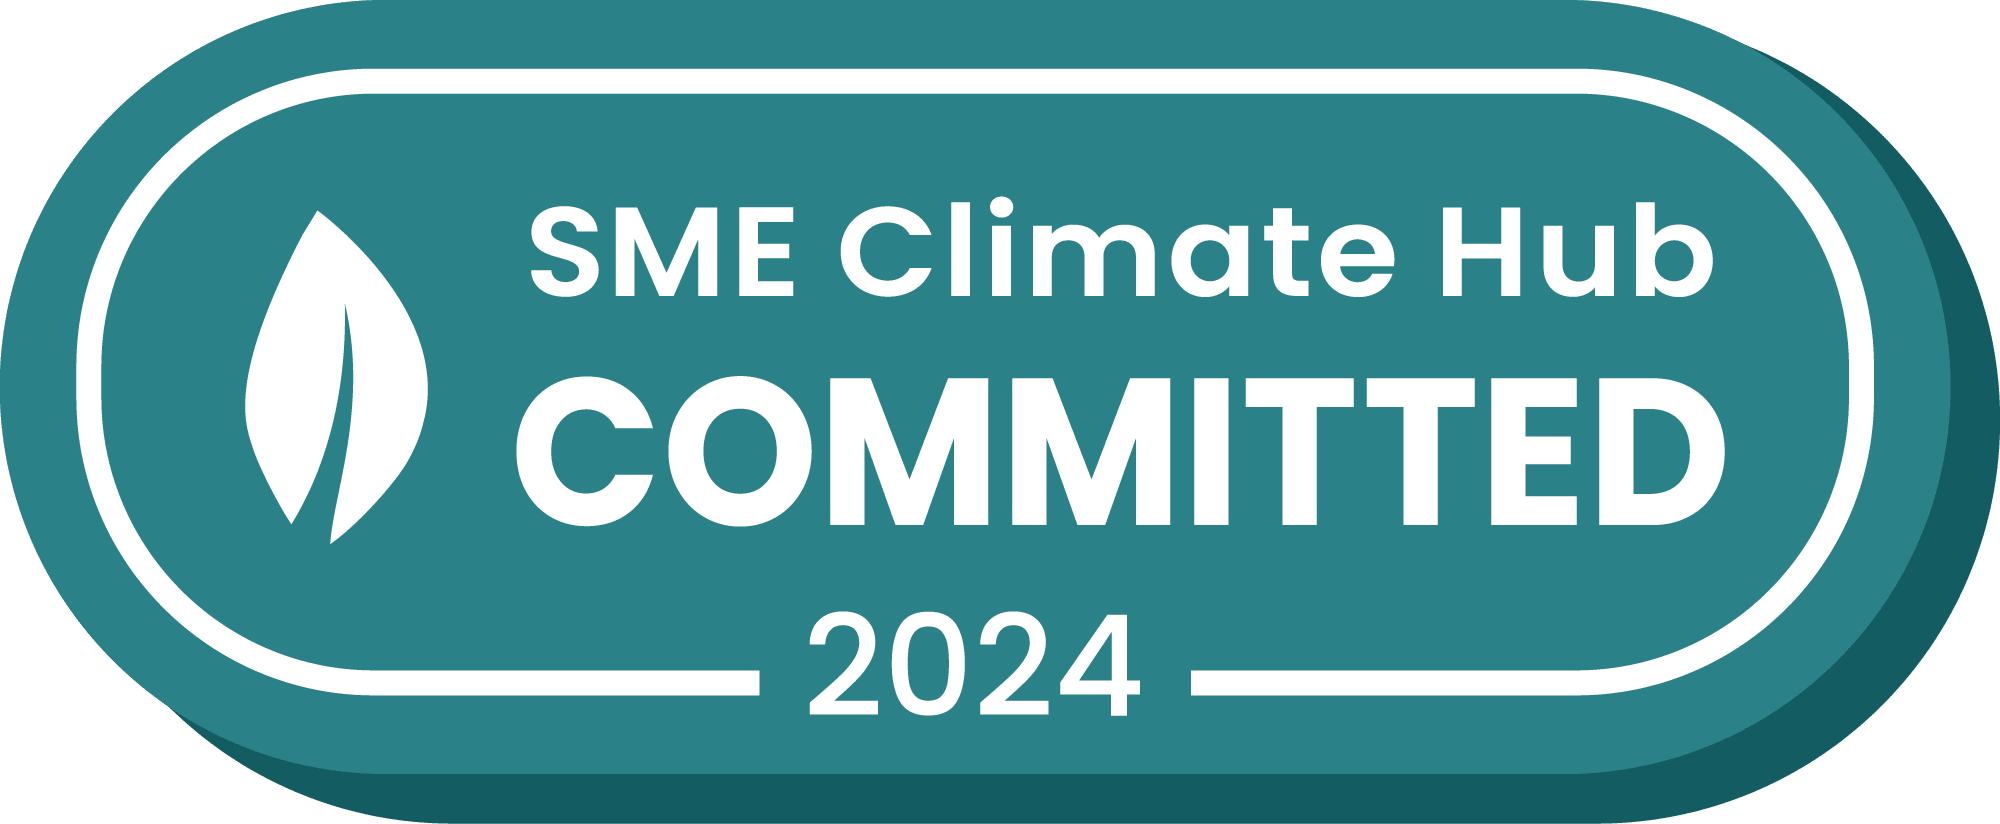 SME Climate Hub Commitment